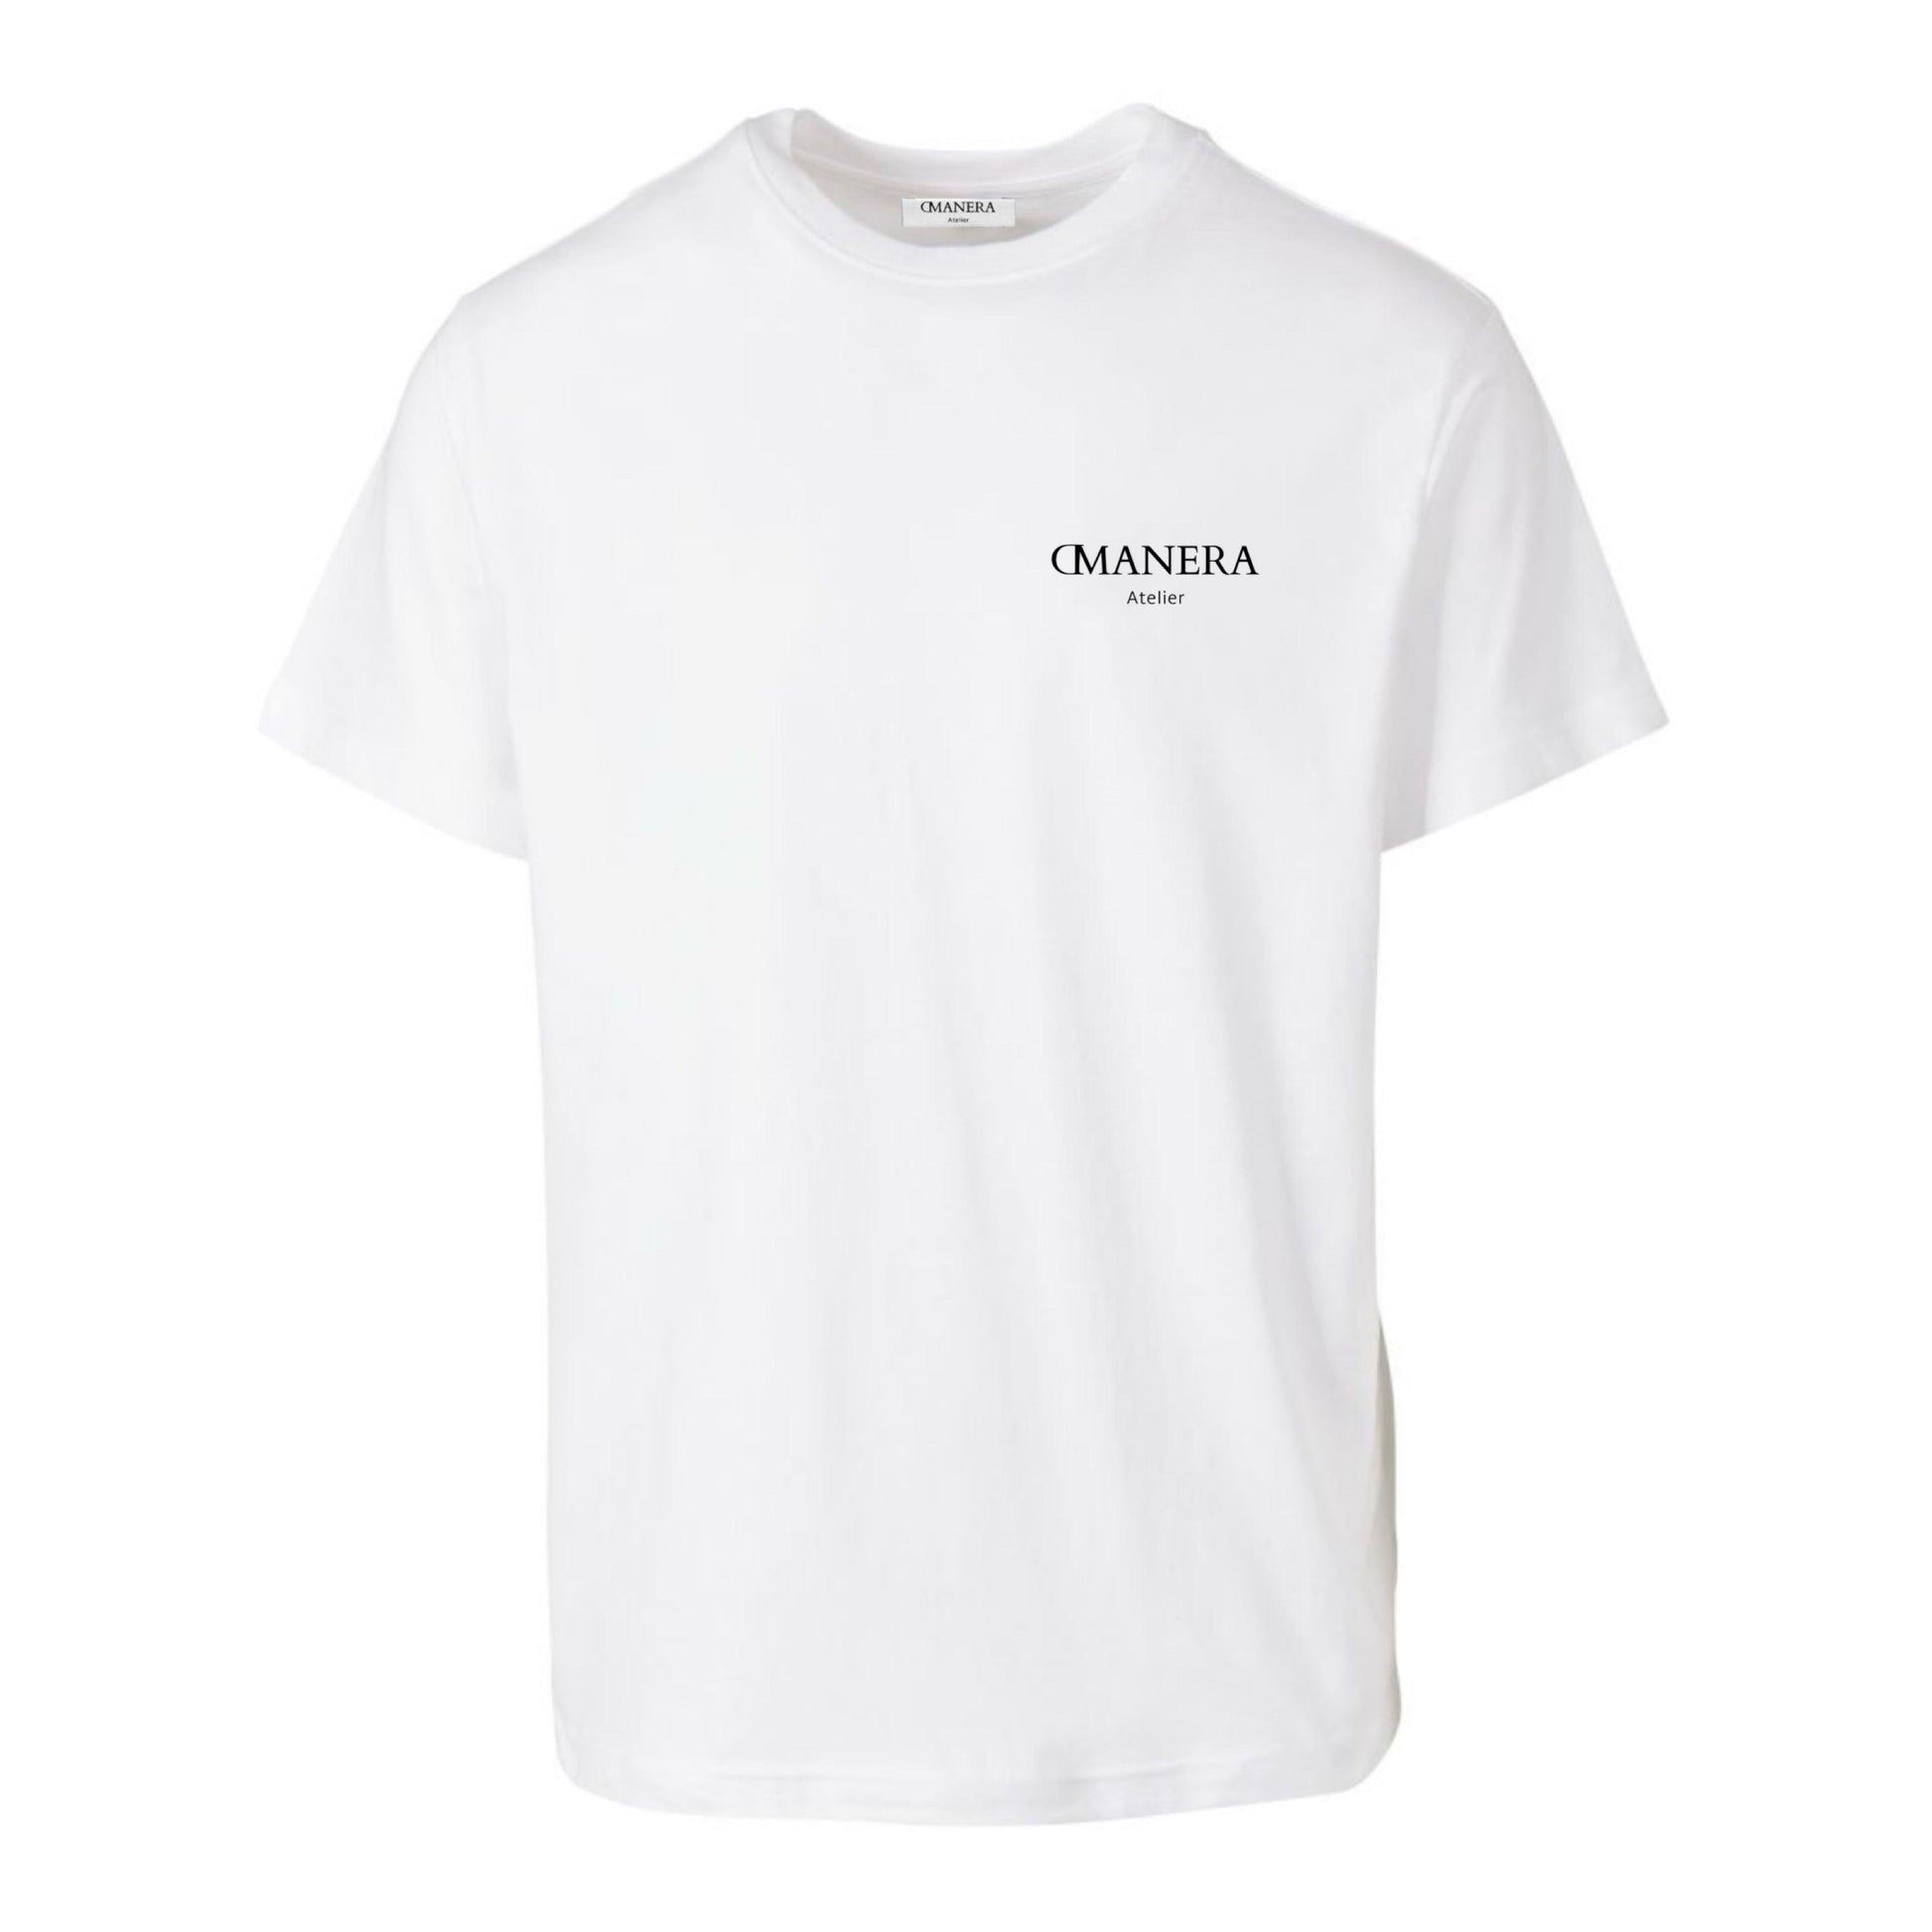 Premium Basic Shirt White/Black 190 g/m² - DMANERA Atelier